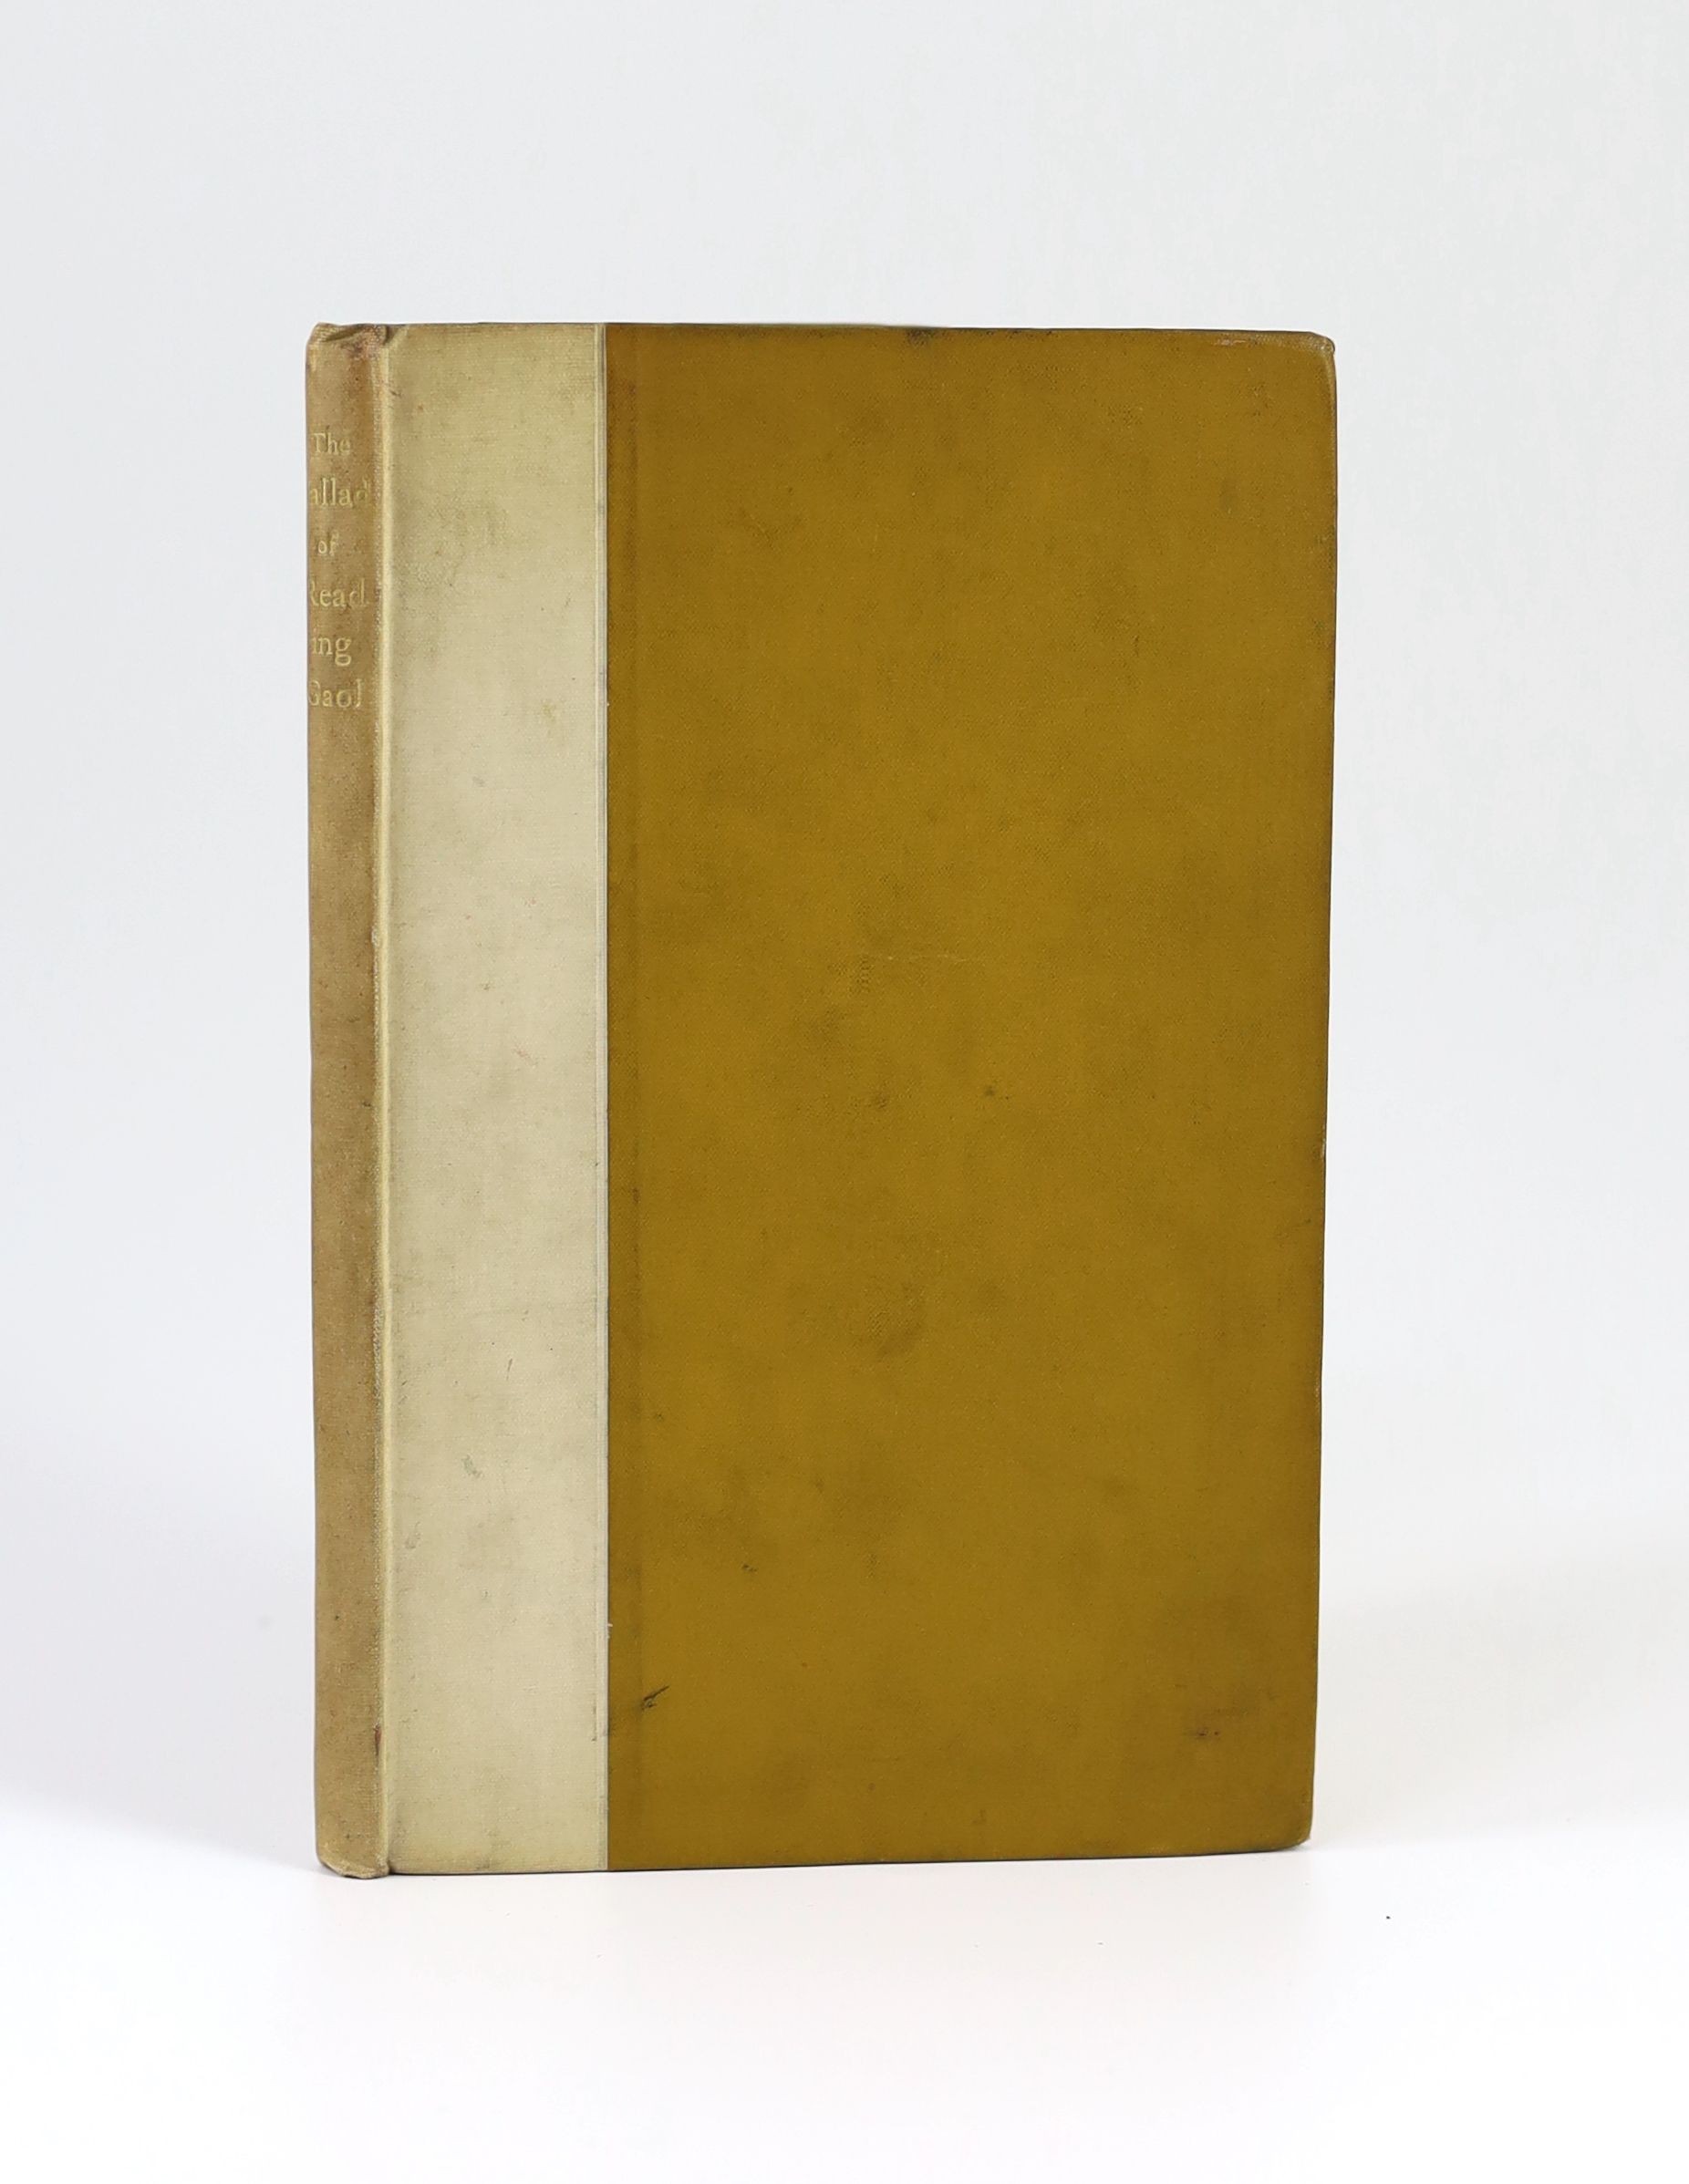 Wilde, Oscar - The Ballad of Reading Gaol, 4th edition, 8vo, cloth, Leonard Smithers, London, 1898